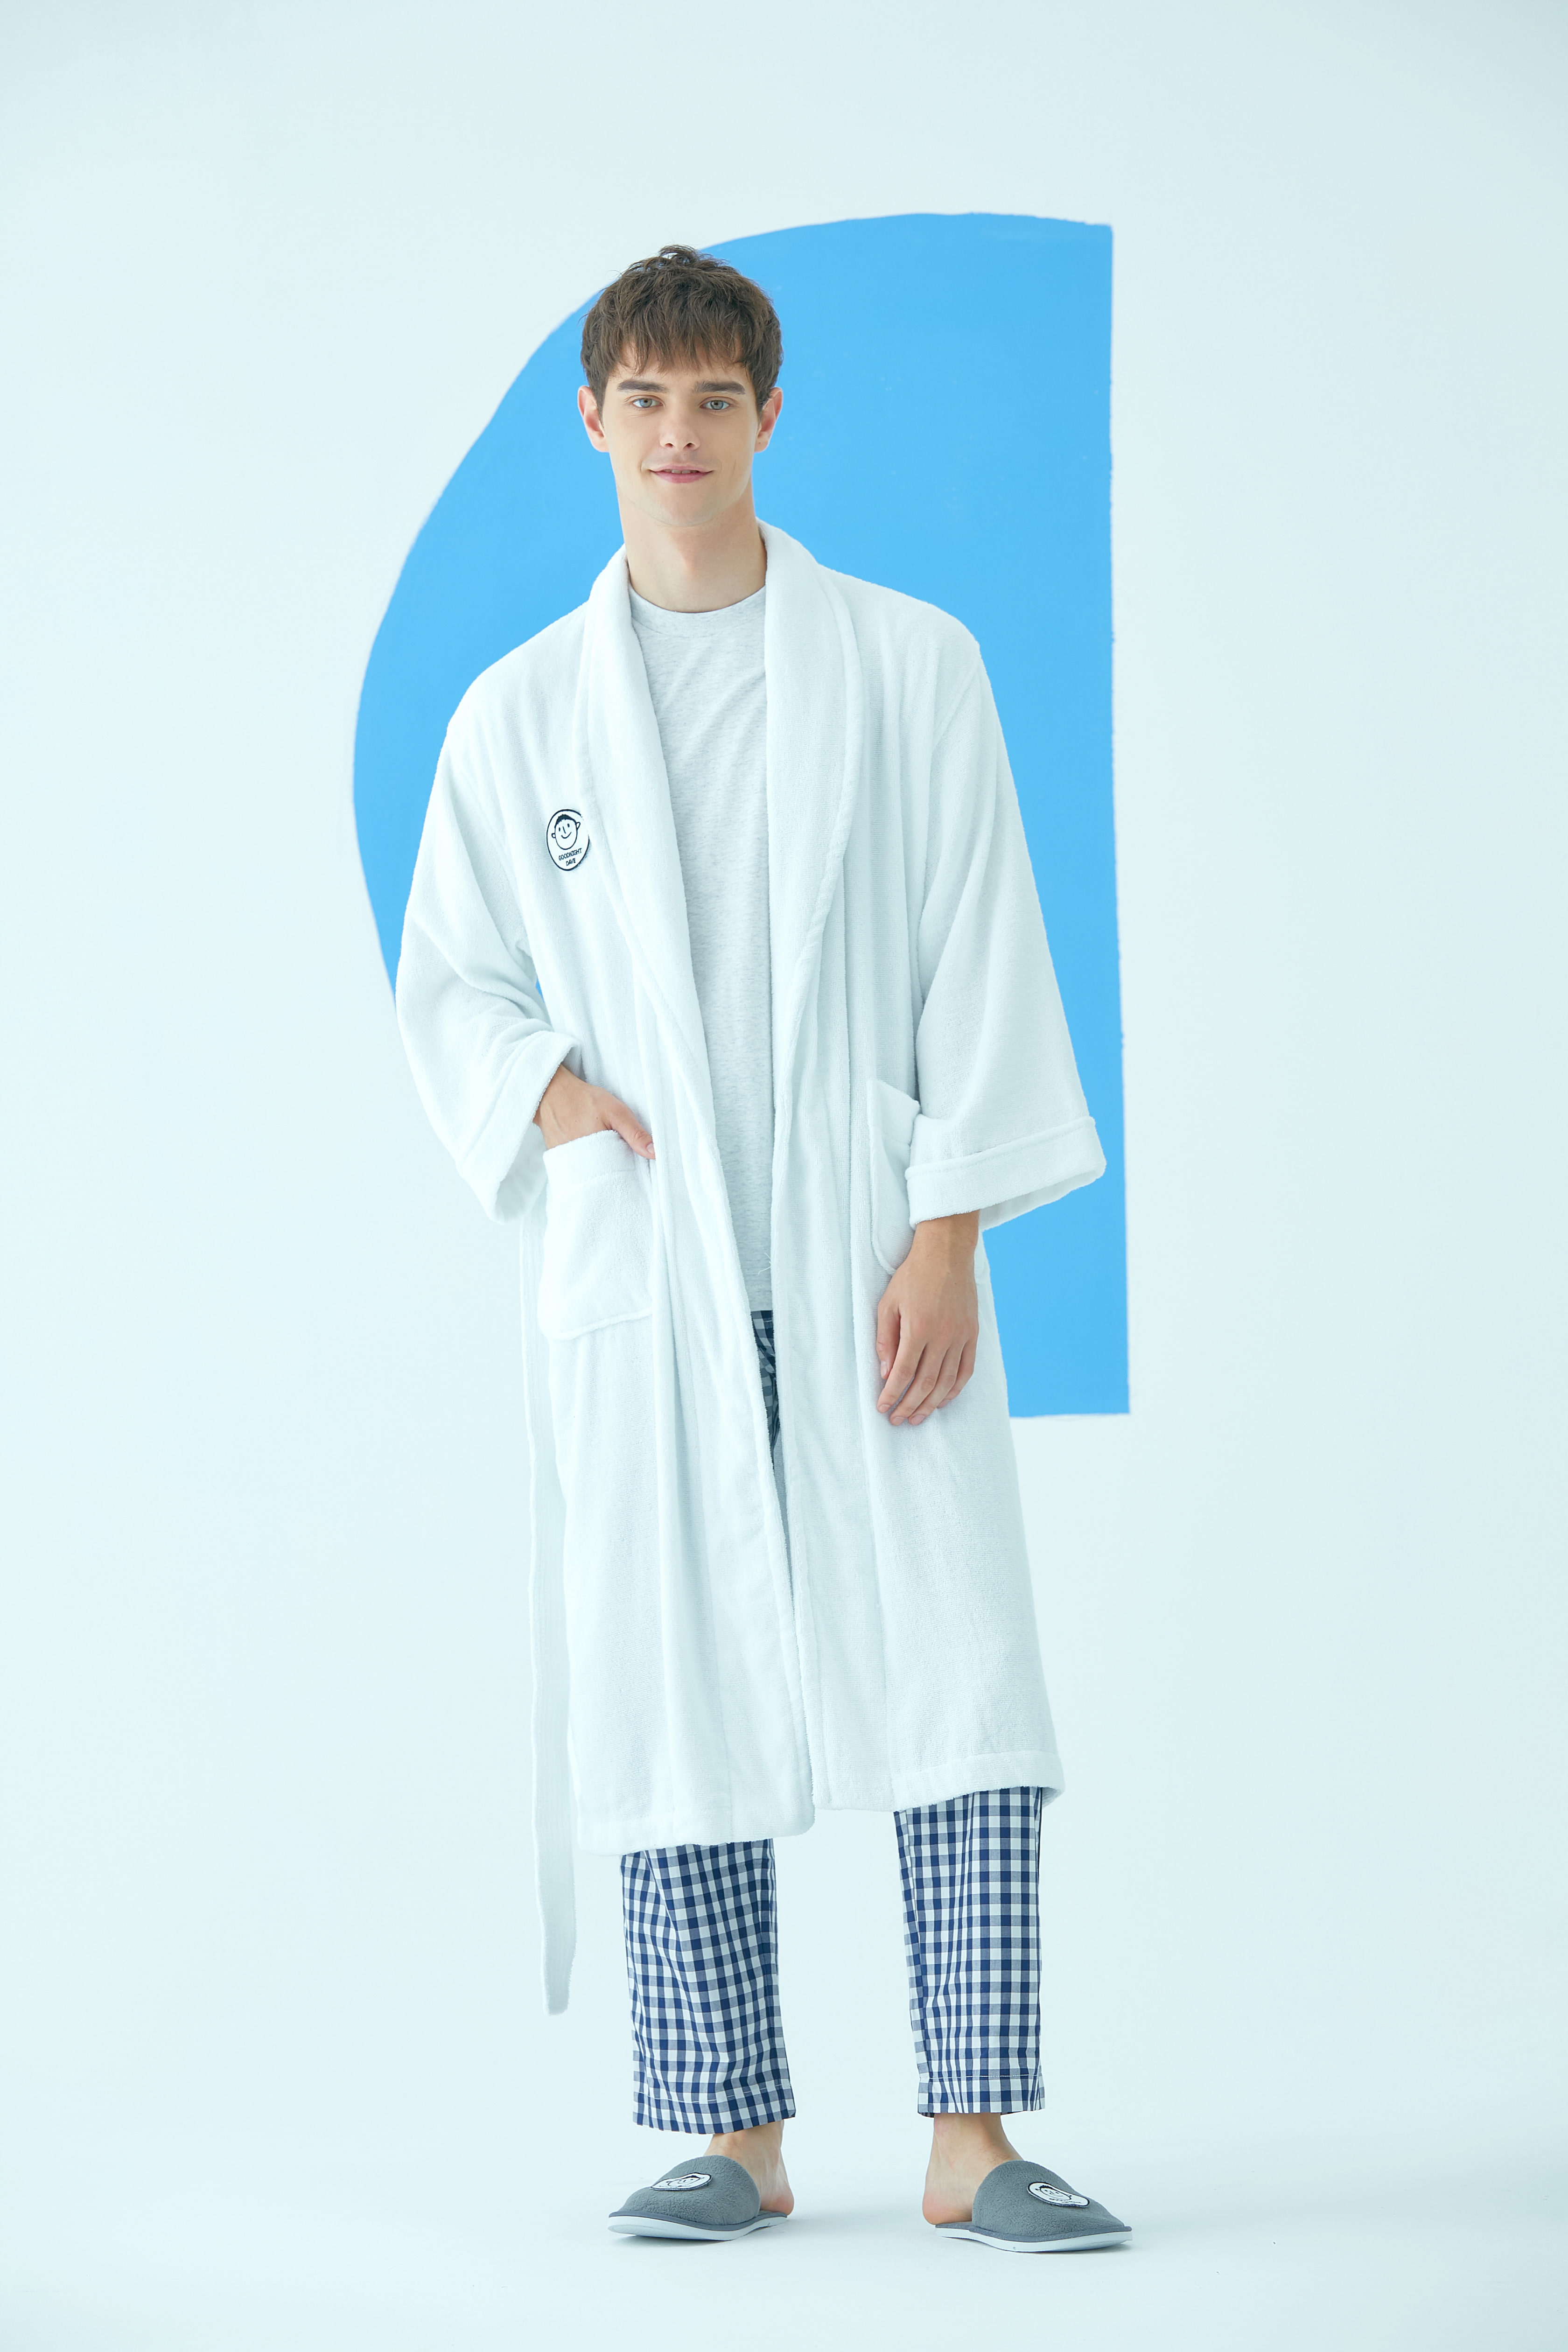 korea fashion brands, made in korea pajamas, pajamas korean wholesale, korean sleepwear supplier, matching pajamas, Modal pajamas, kpop fashion brands, kids pajamas and sleepwear, family pajamas, Designer Sleepwear for Women